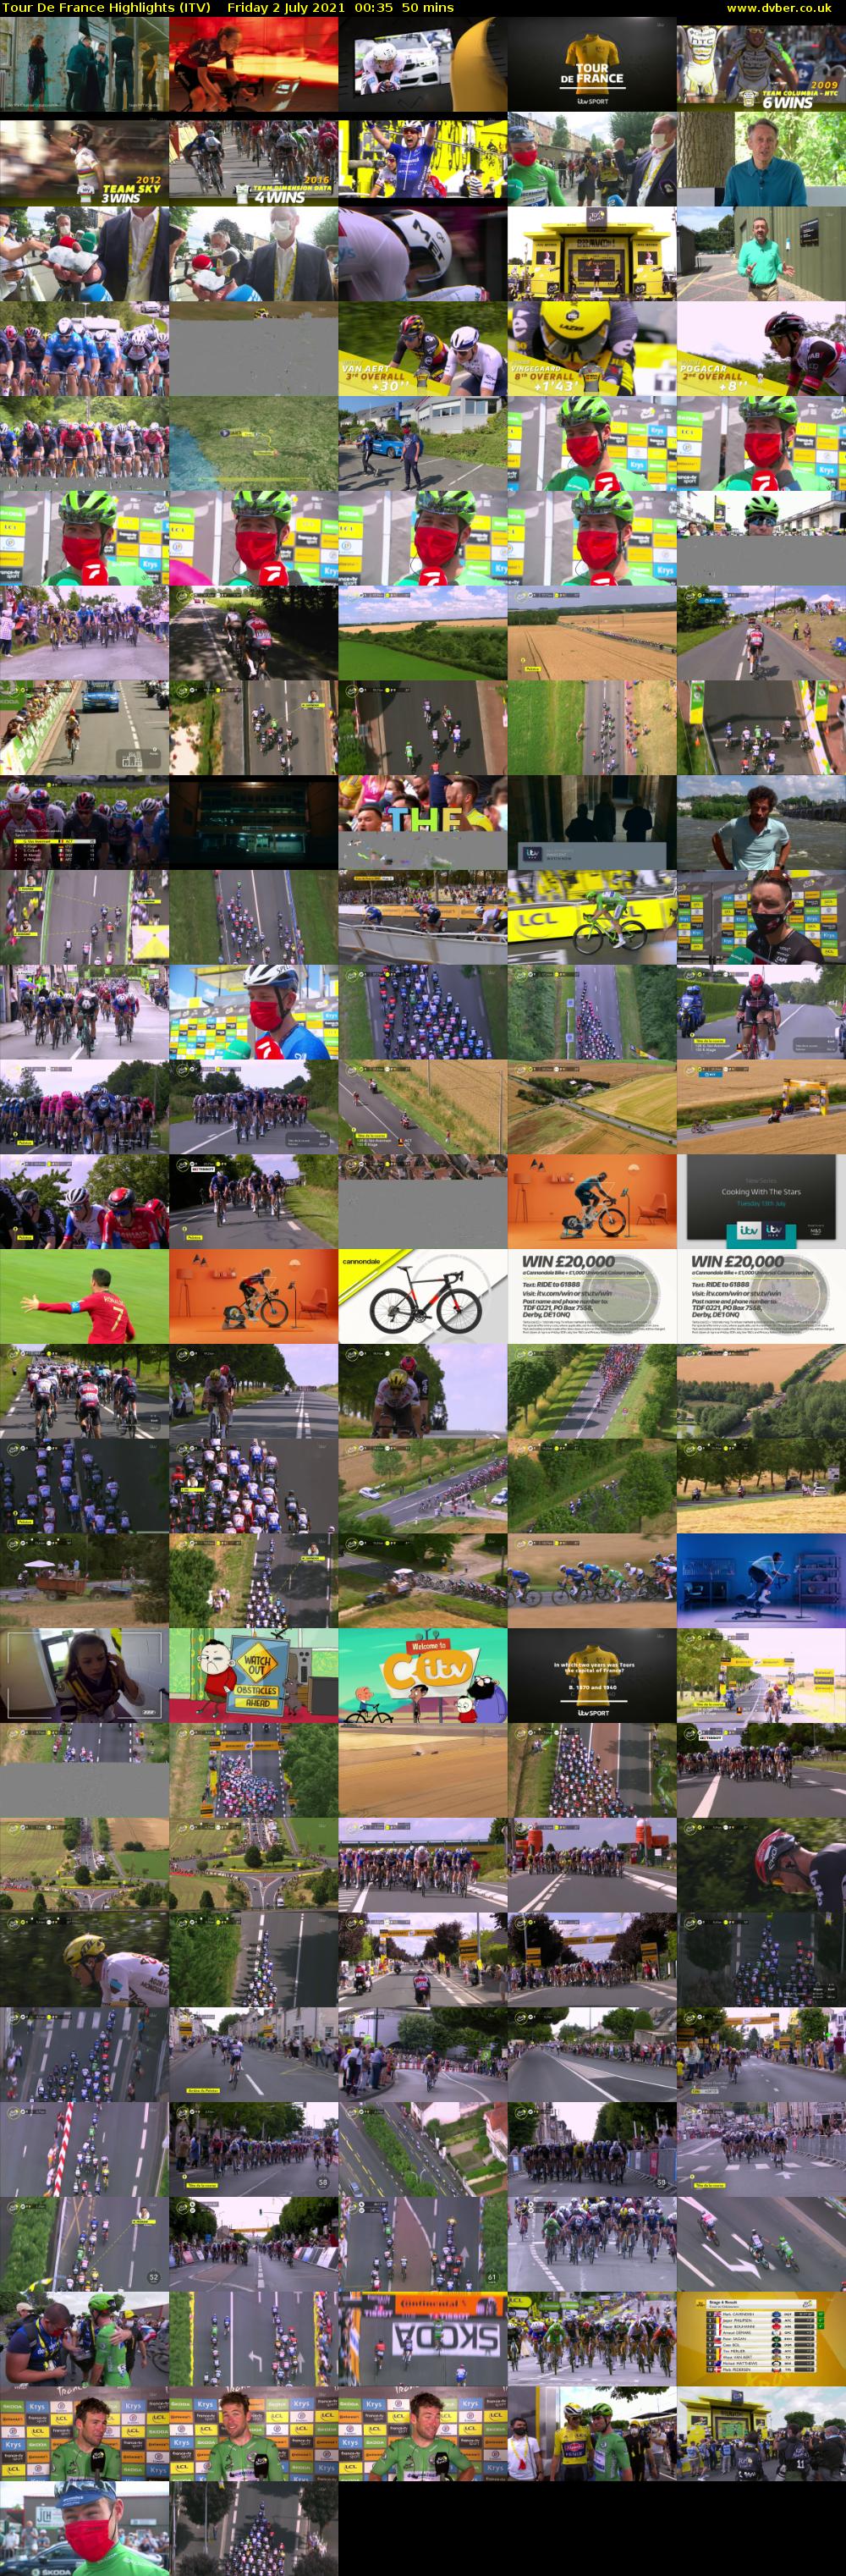 Tour De France Highlights (ITV) Friday 2 July 2021 00:35 - 01:25